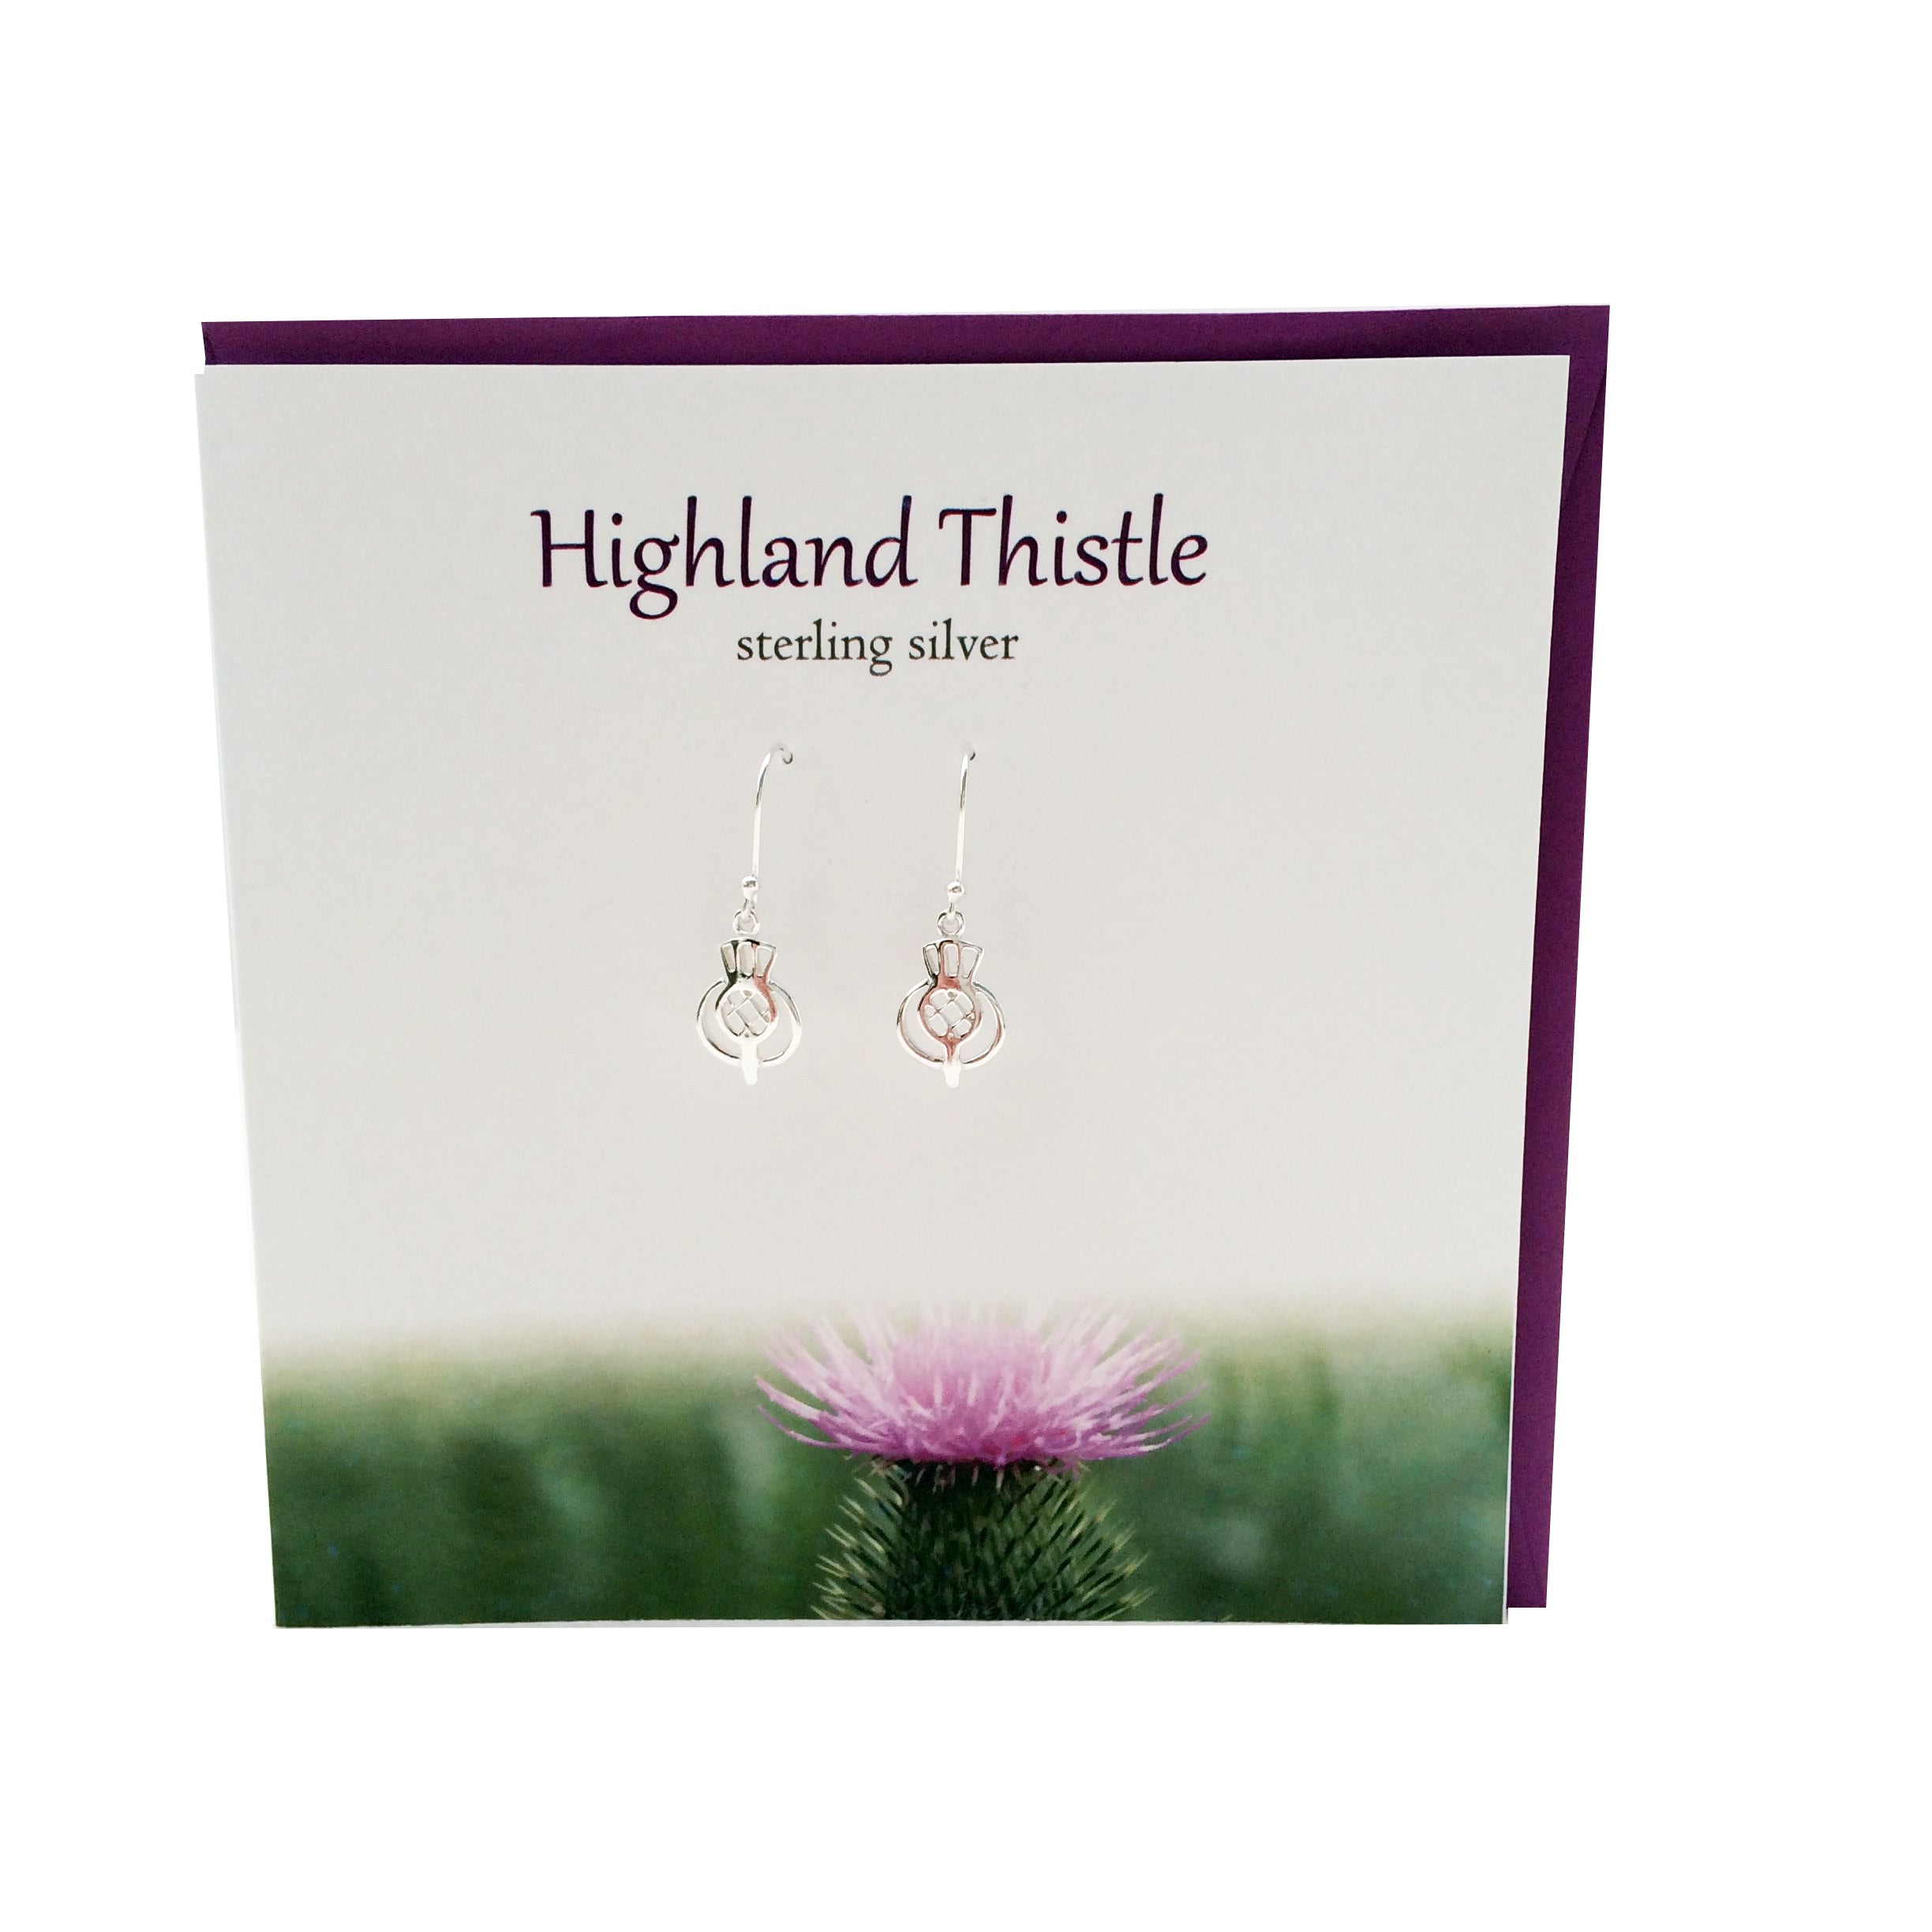 Highland Scottish Thistle silver earrings | The Silver Studio Scotland